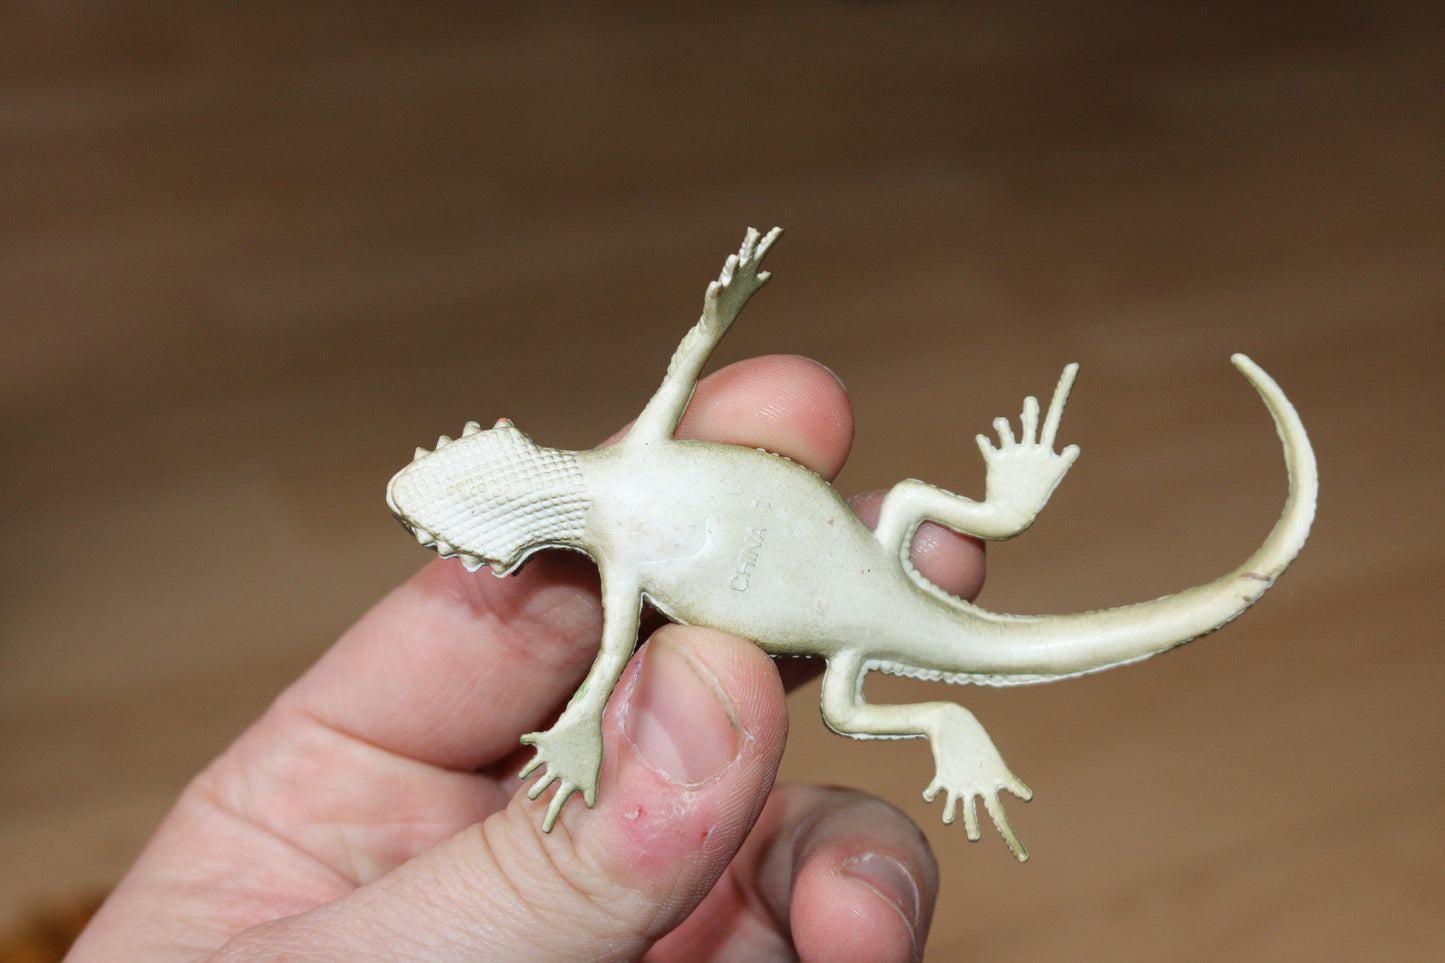 Model Lizard Toy Reptile Plastic Forest Wild Animal Figure